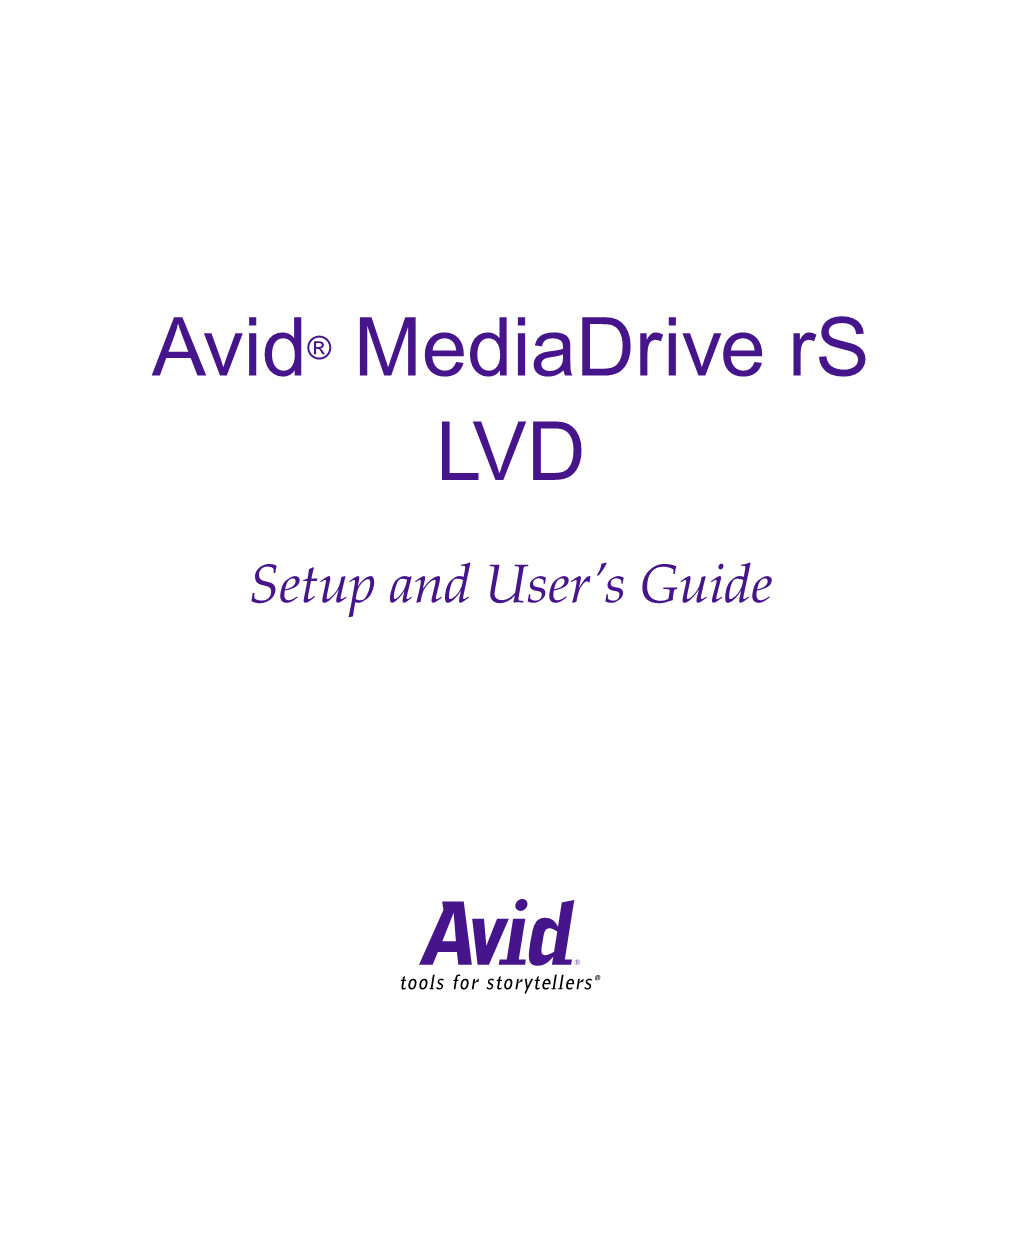 Avid Mediadrive Rs LVD Setup and User's Guide